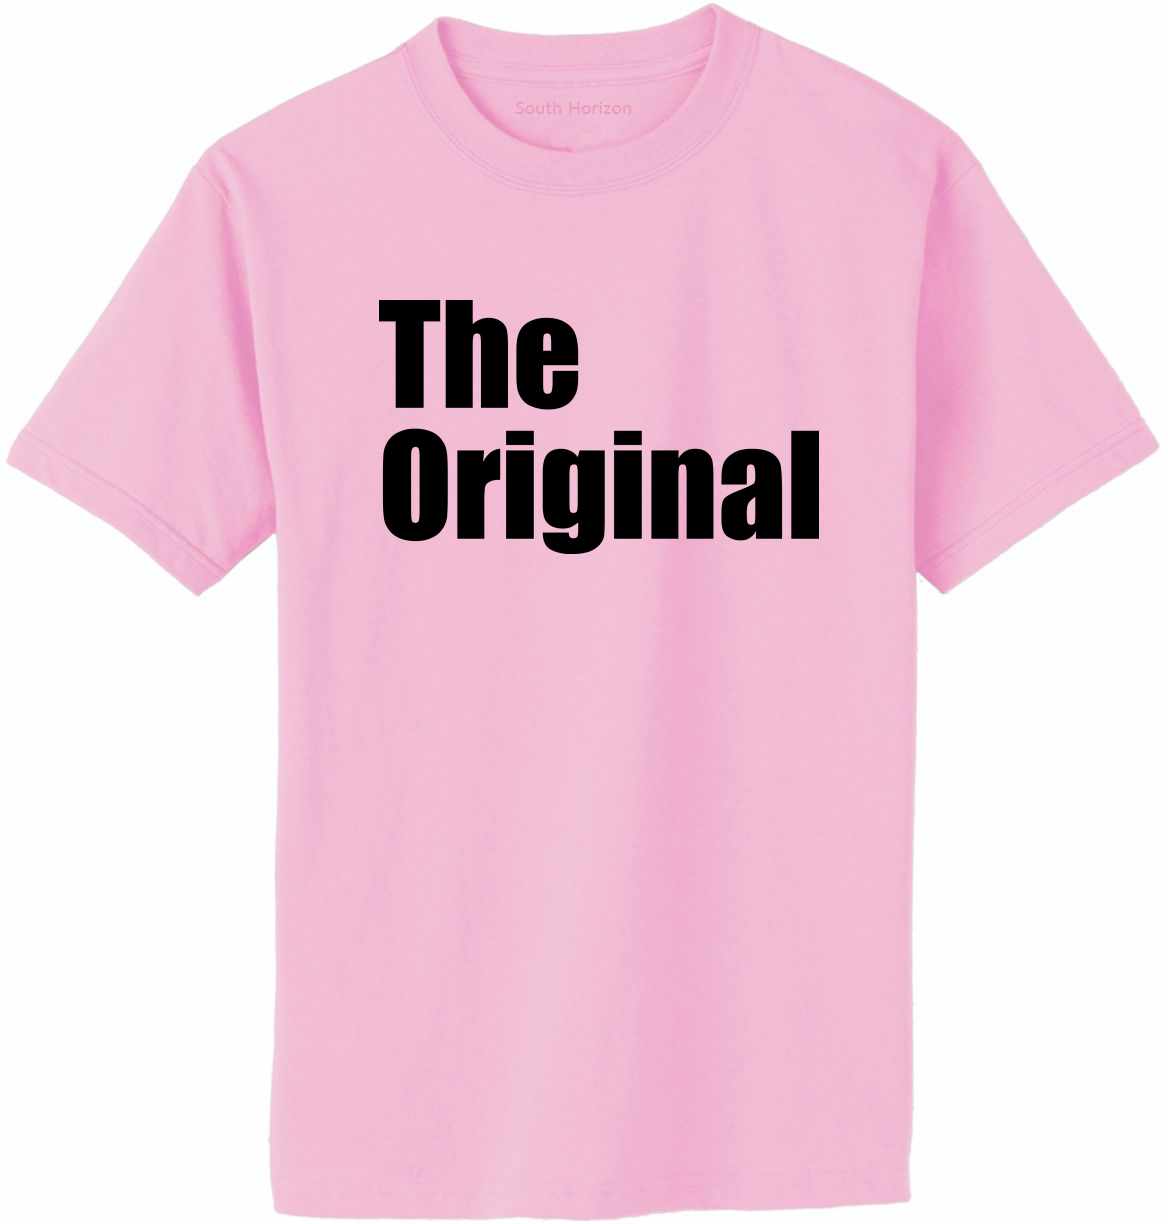 The Original on Adult T-Shirt (#1190-1)